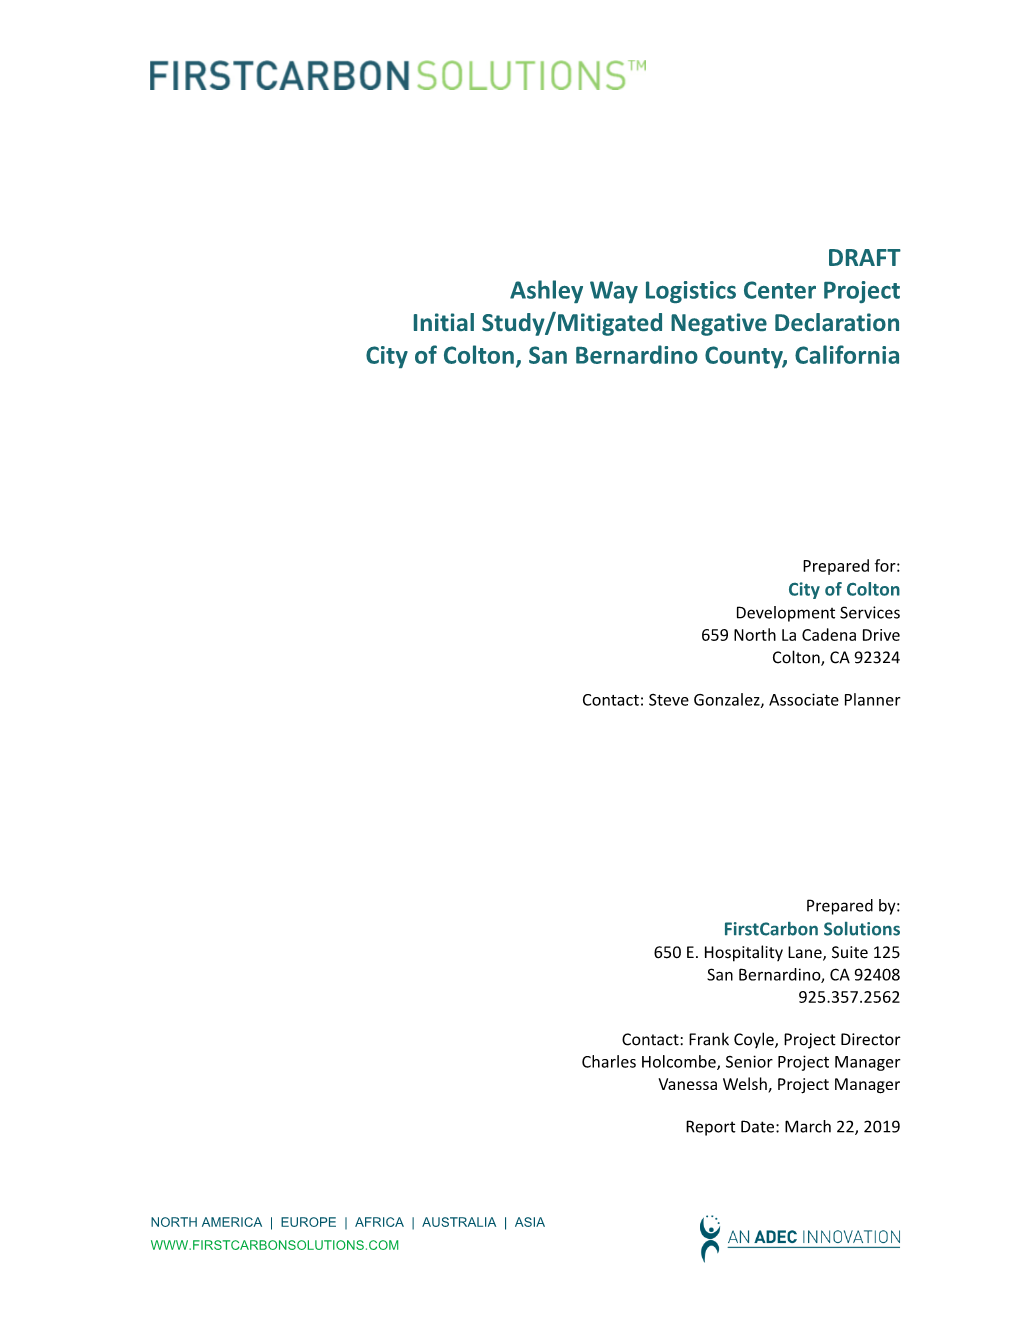 DRAFT Ashley Way Logistics Center Project Initial Study/Mitigated Negative Declaration City of Colton, San Bernardino County, California